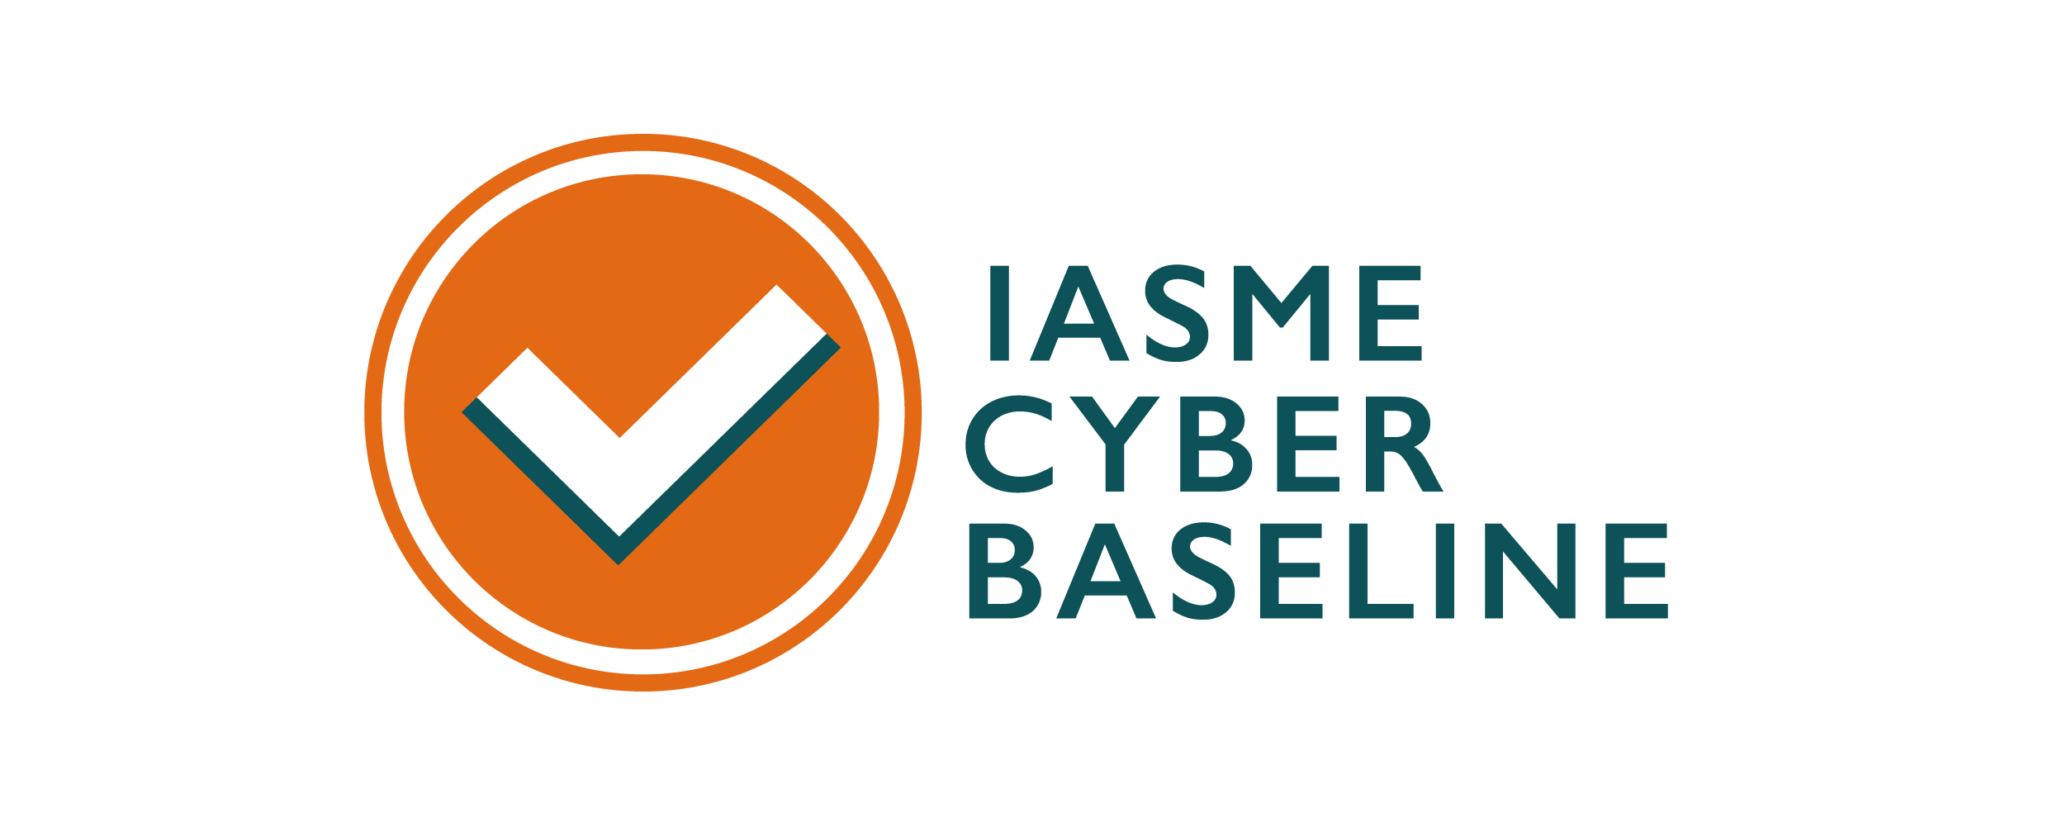 IASME Cyber Baseline logo orange circle with a tick